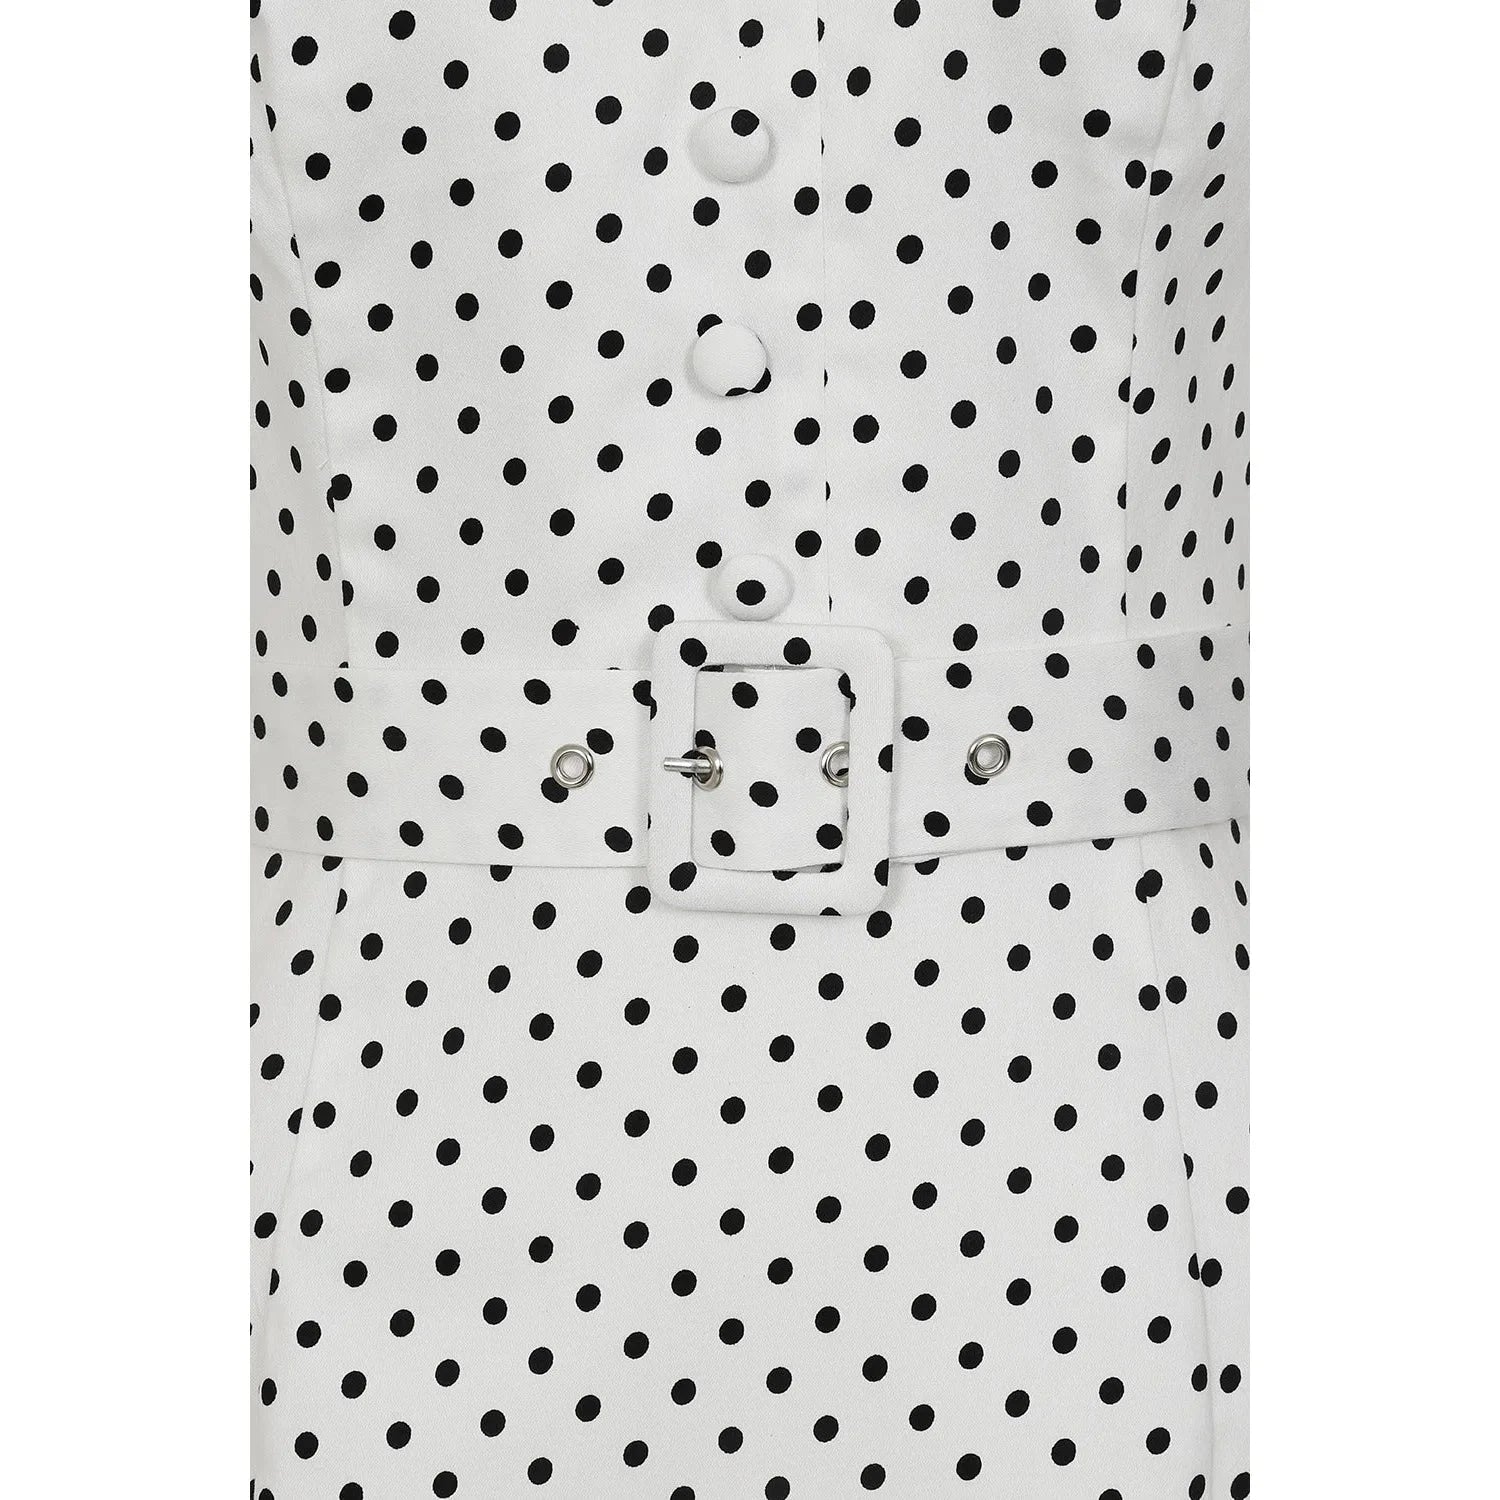 White And Black Polka Dot Classic 40s Vintage Wiggle Dress